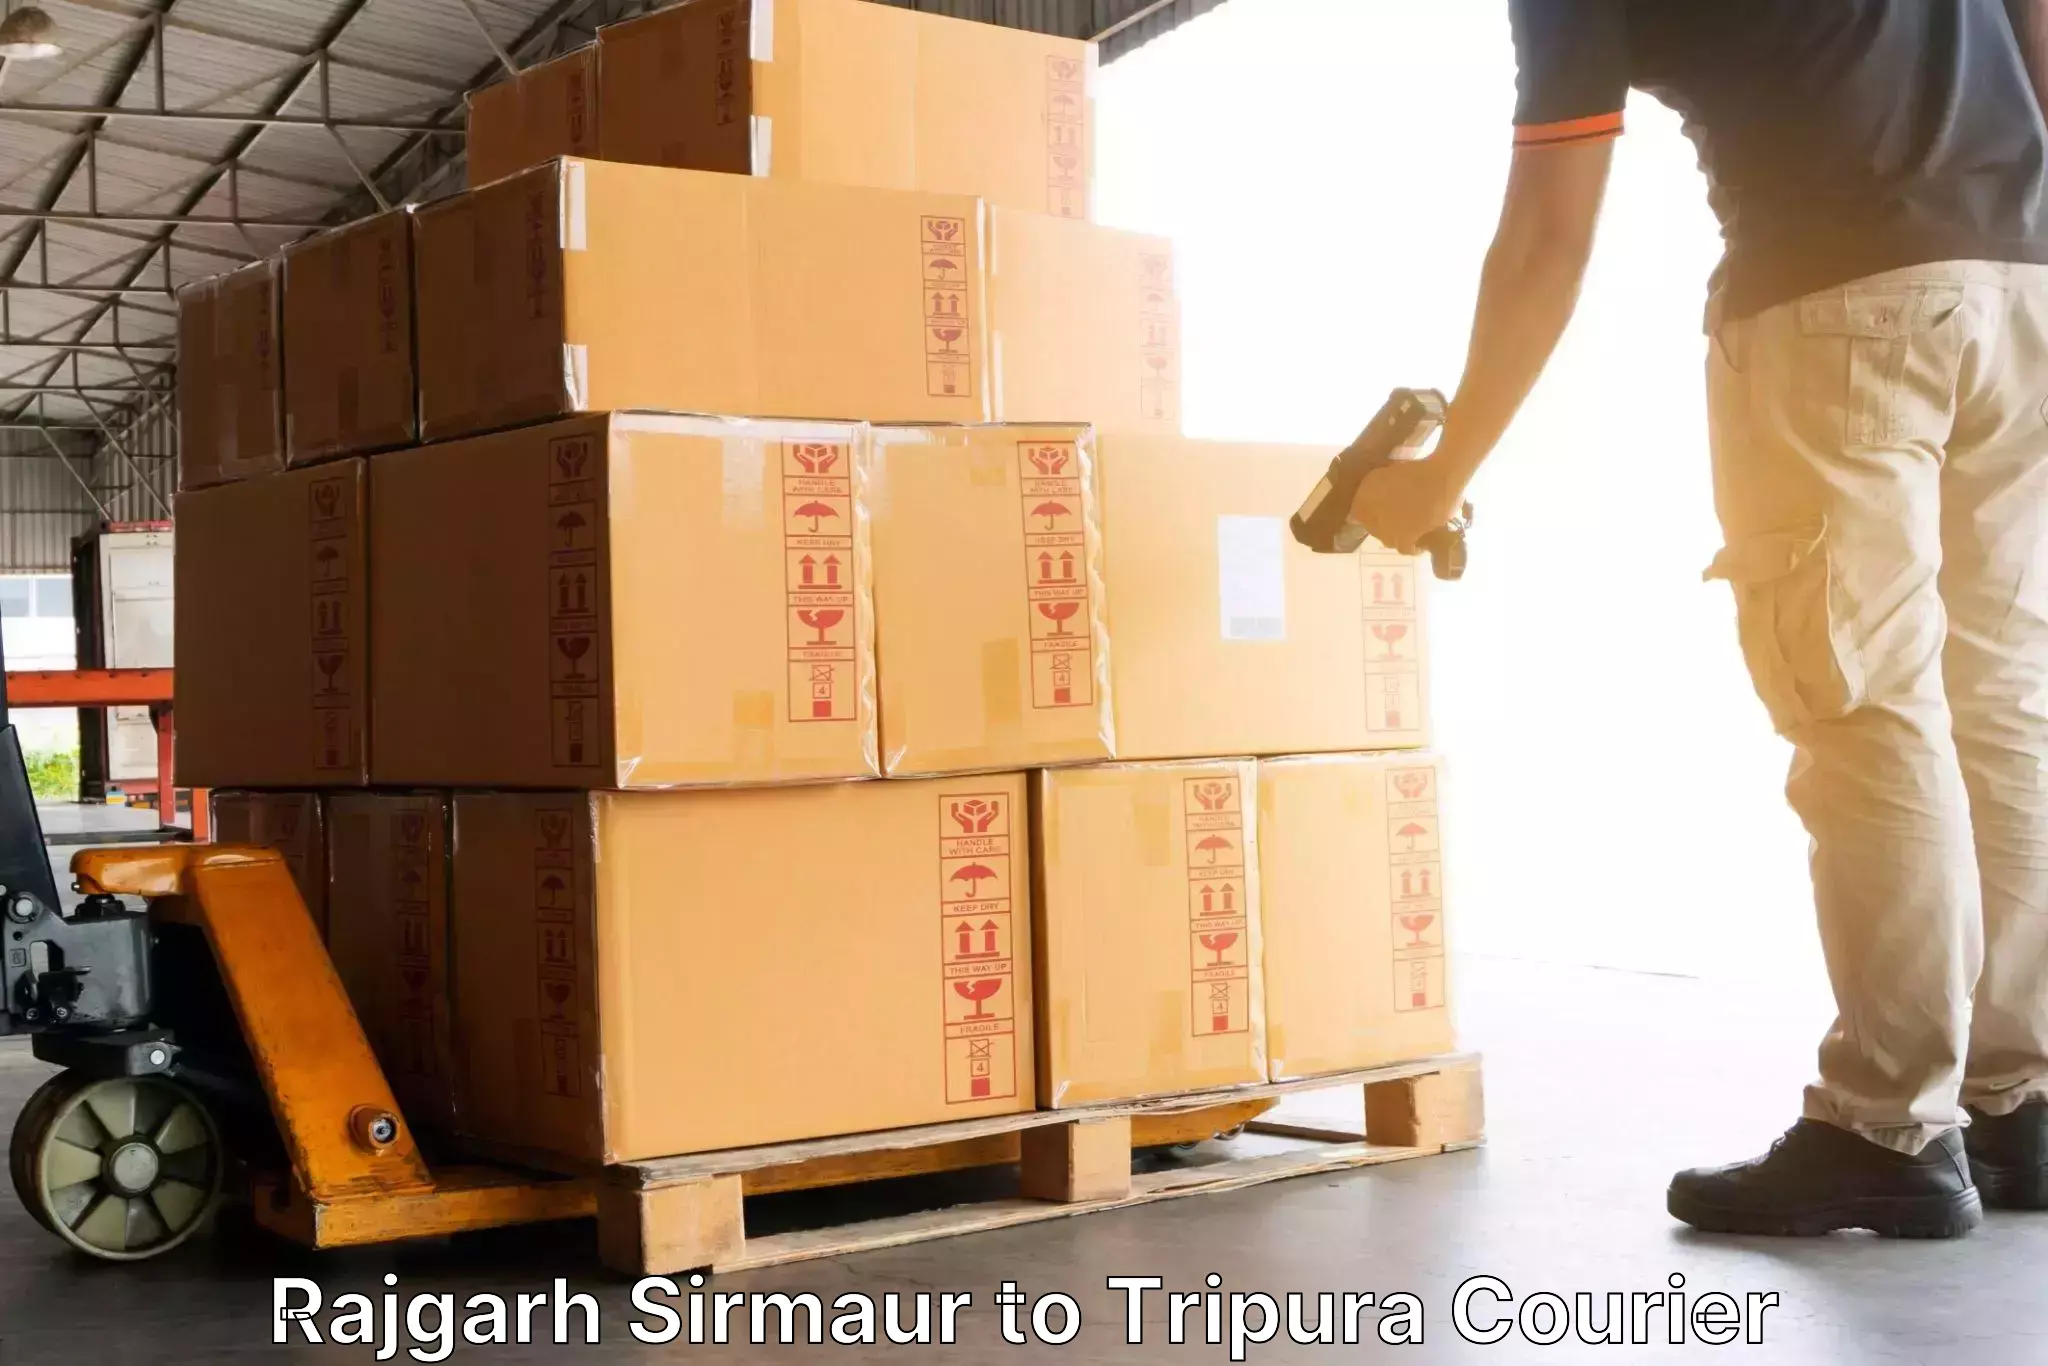 Courier service comparison Rajgarh Sirmaur to IIIT Agartala